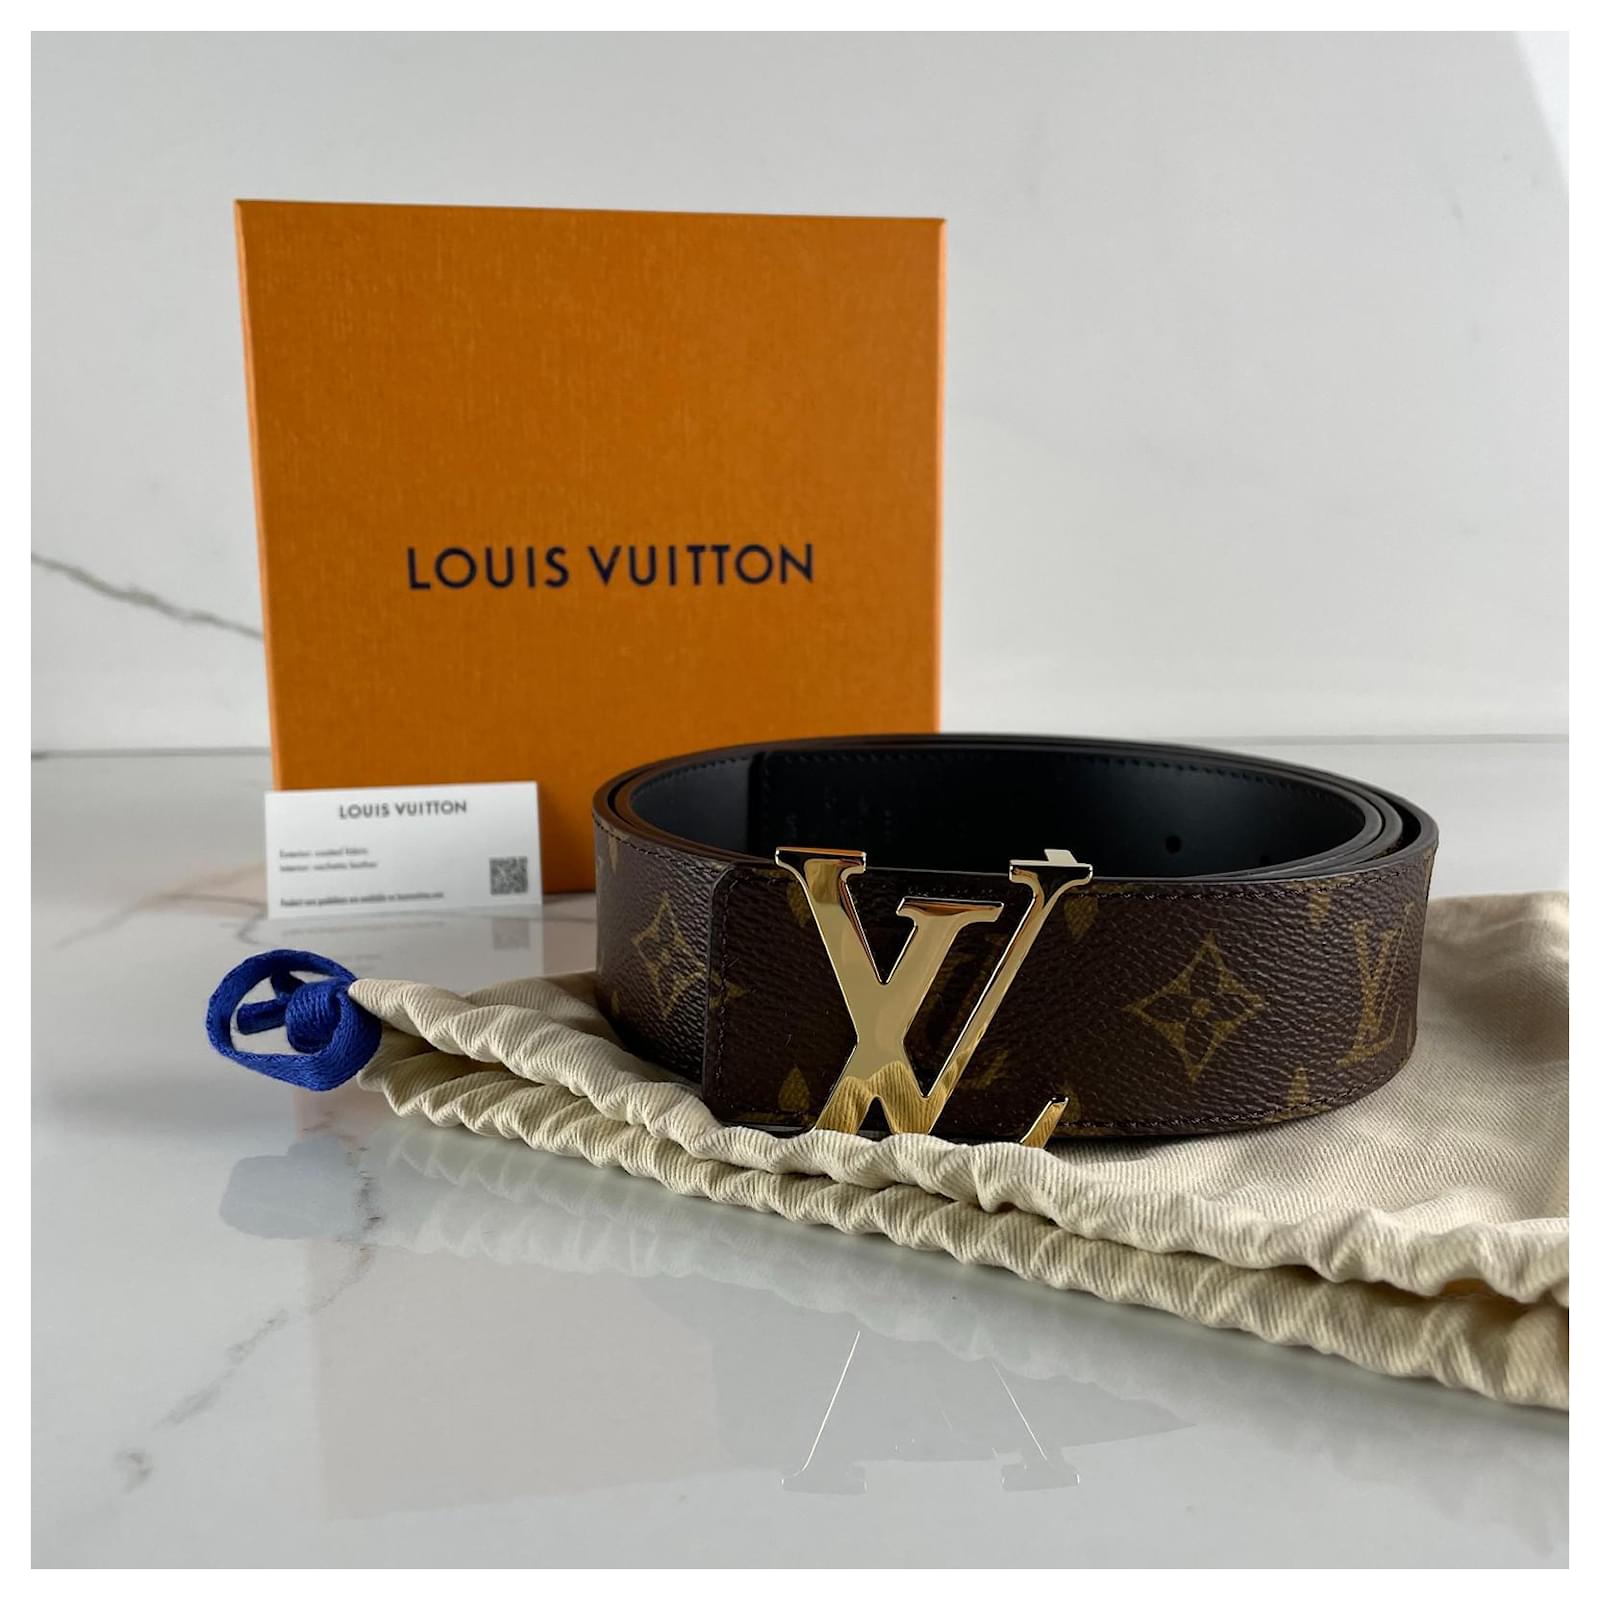 Louis Vuitton LV Initials 40mm Reversible Belt Brown